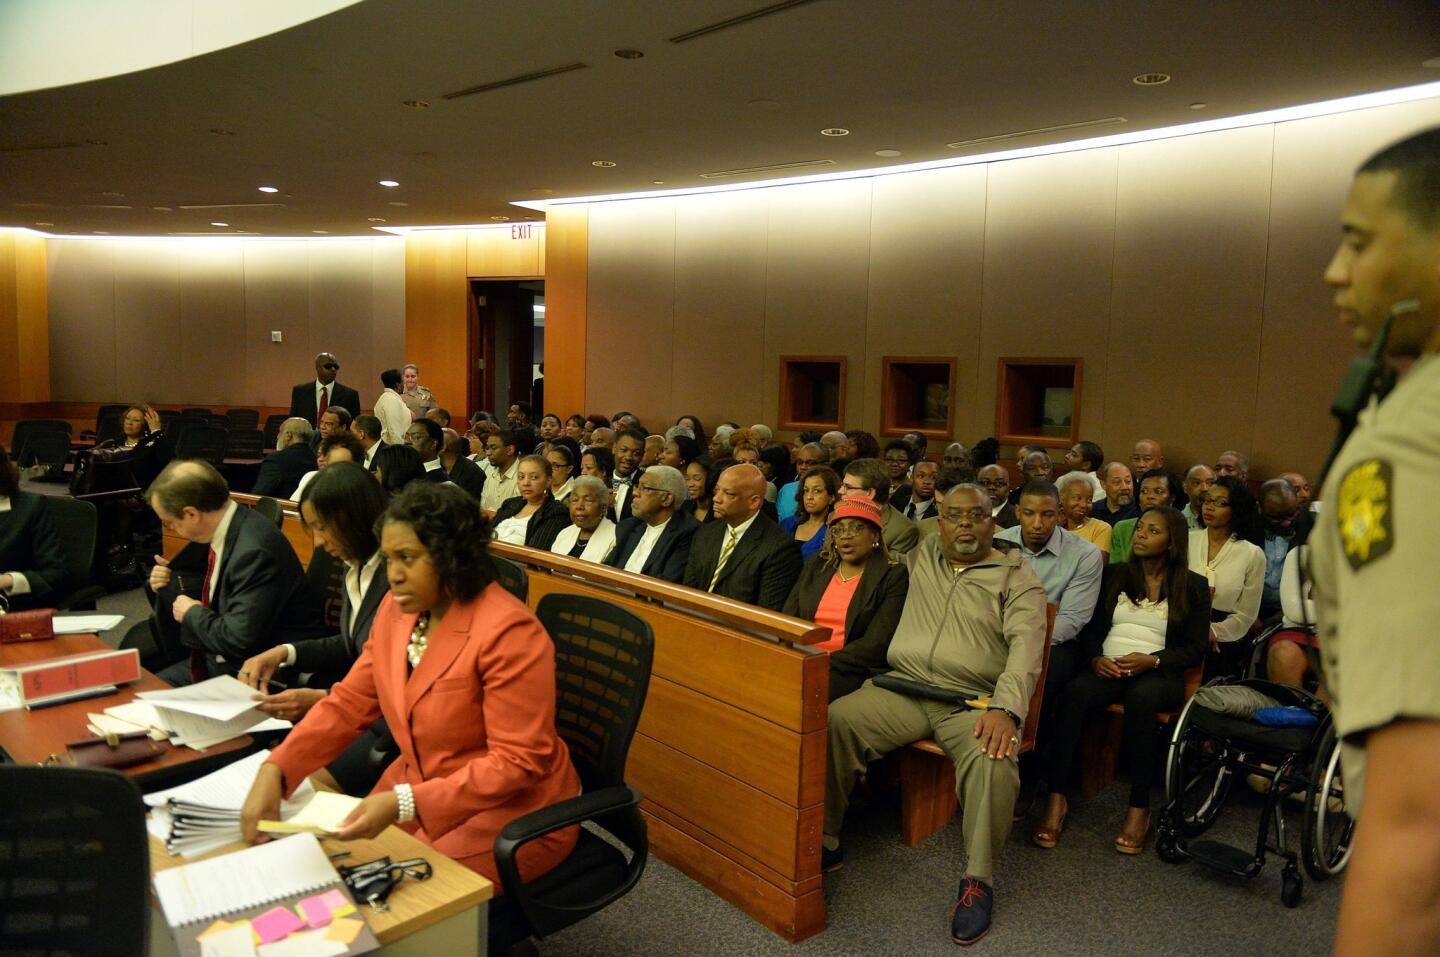 Atlanta public school cheating trial